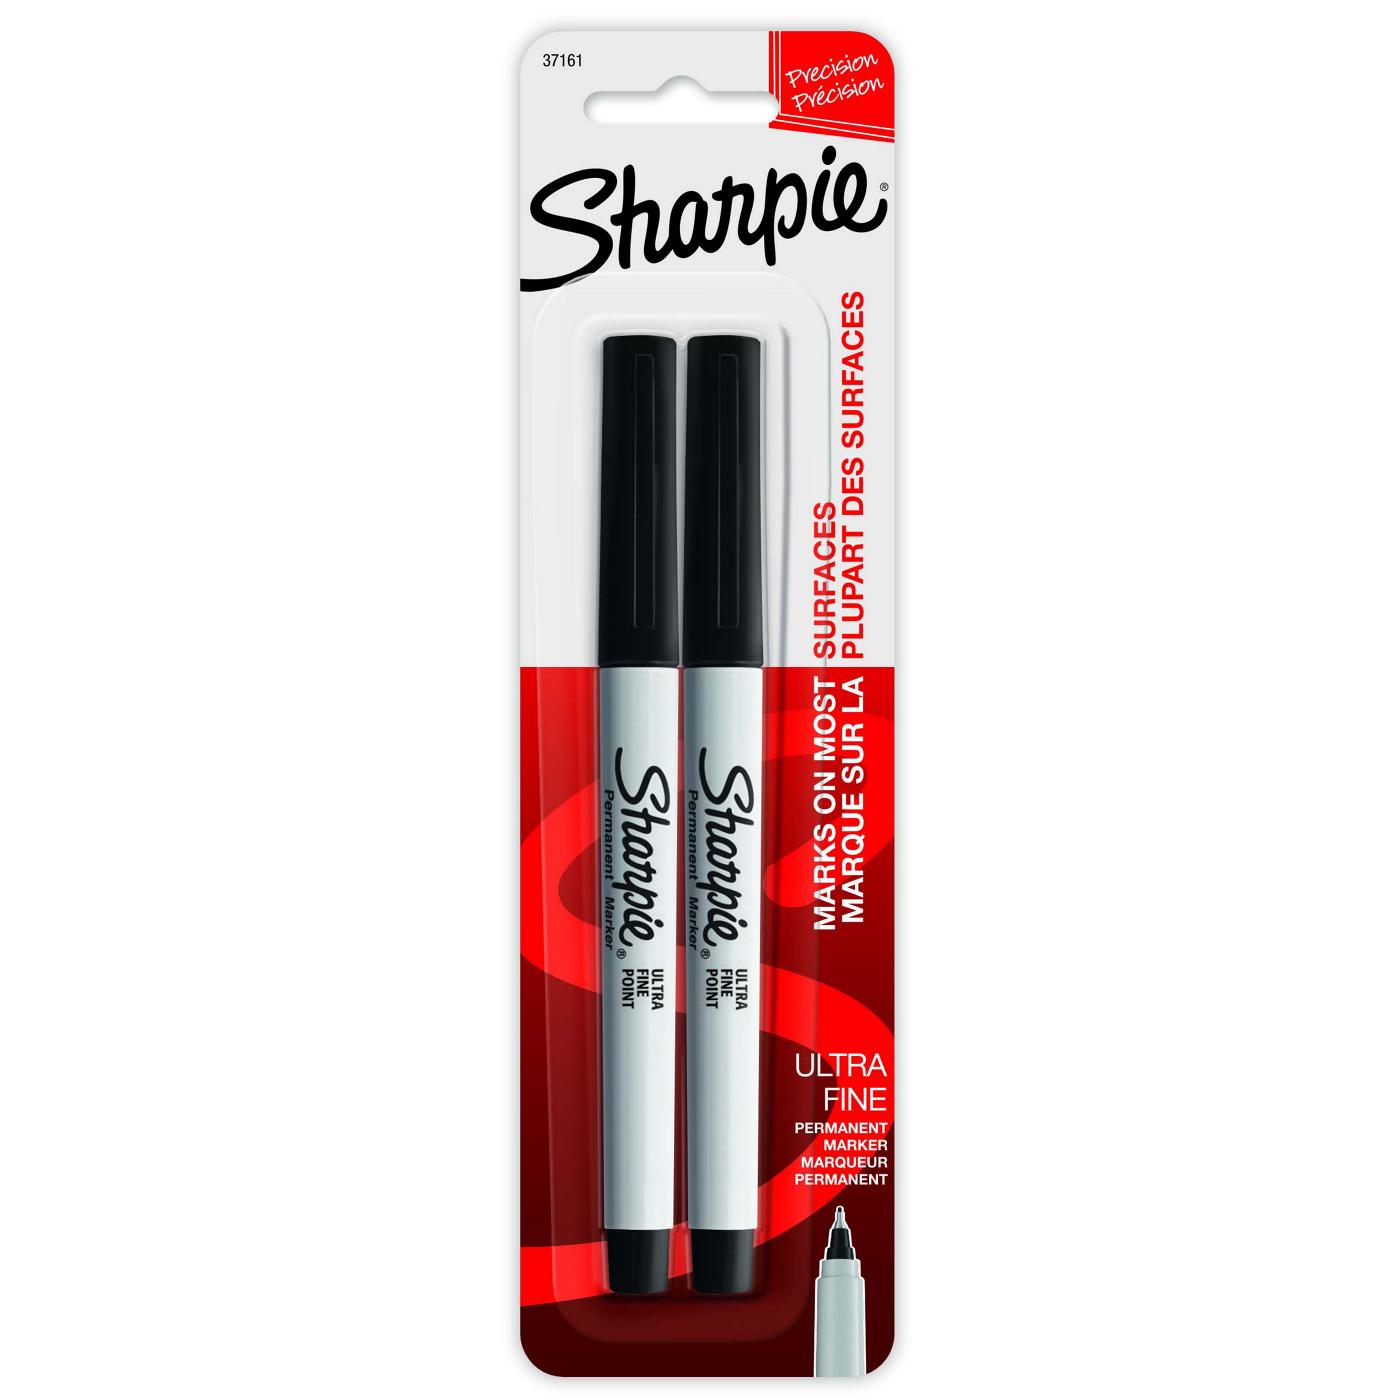 Sharpie Ultra Fine Tip Permanent Markers - Black Ink; image 1 of 2